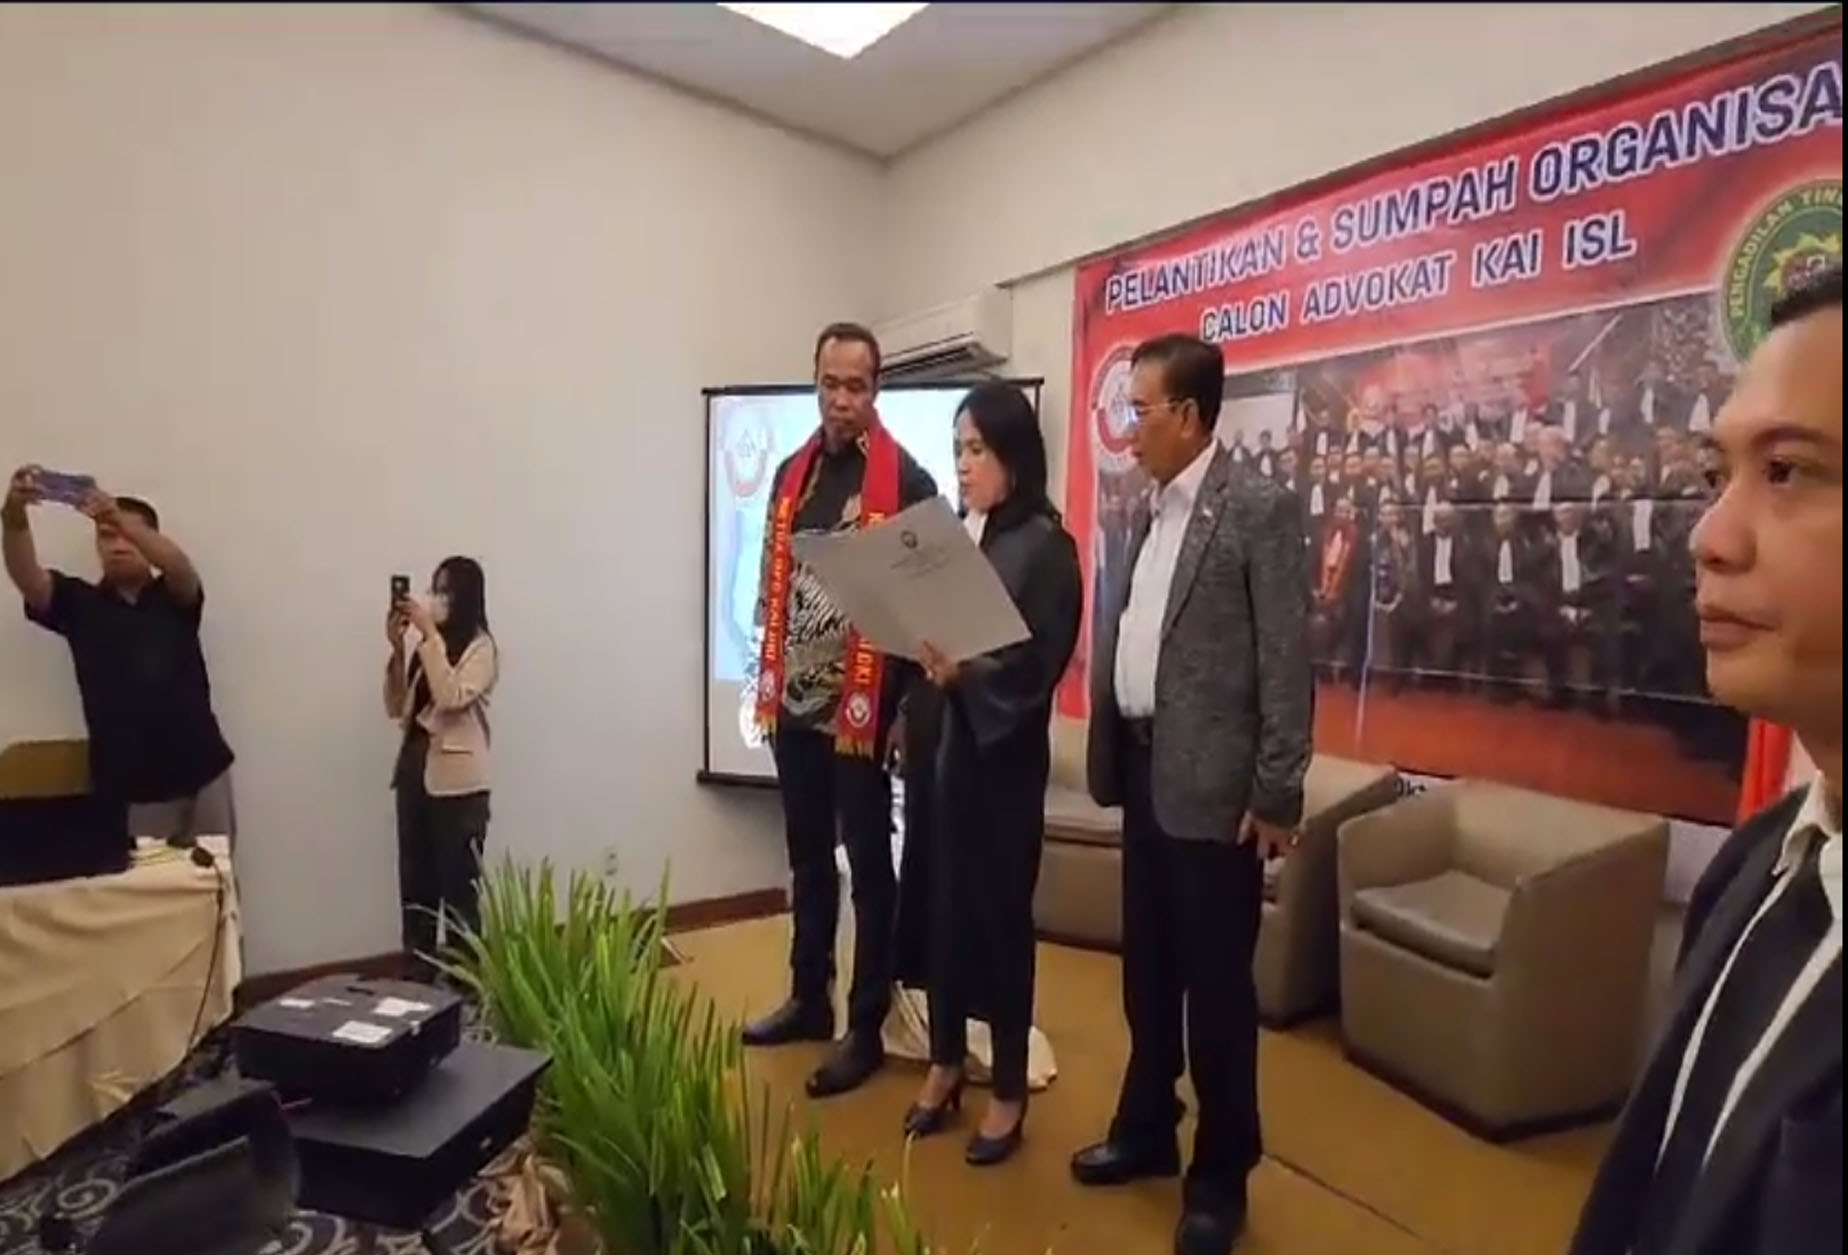 Pelantikan Advokat Organisasi DPD KAI DKI Jakarta 21 Okto...